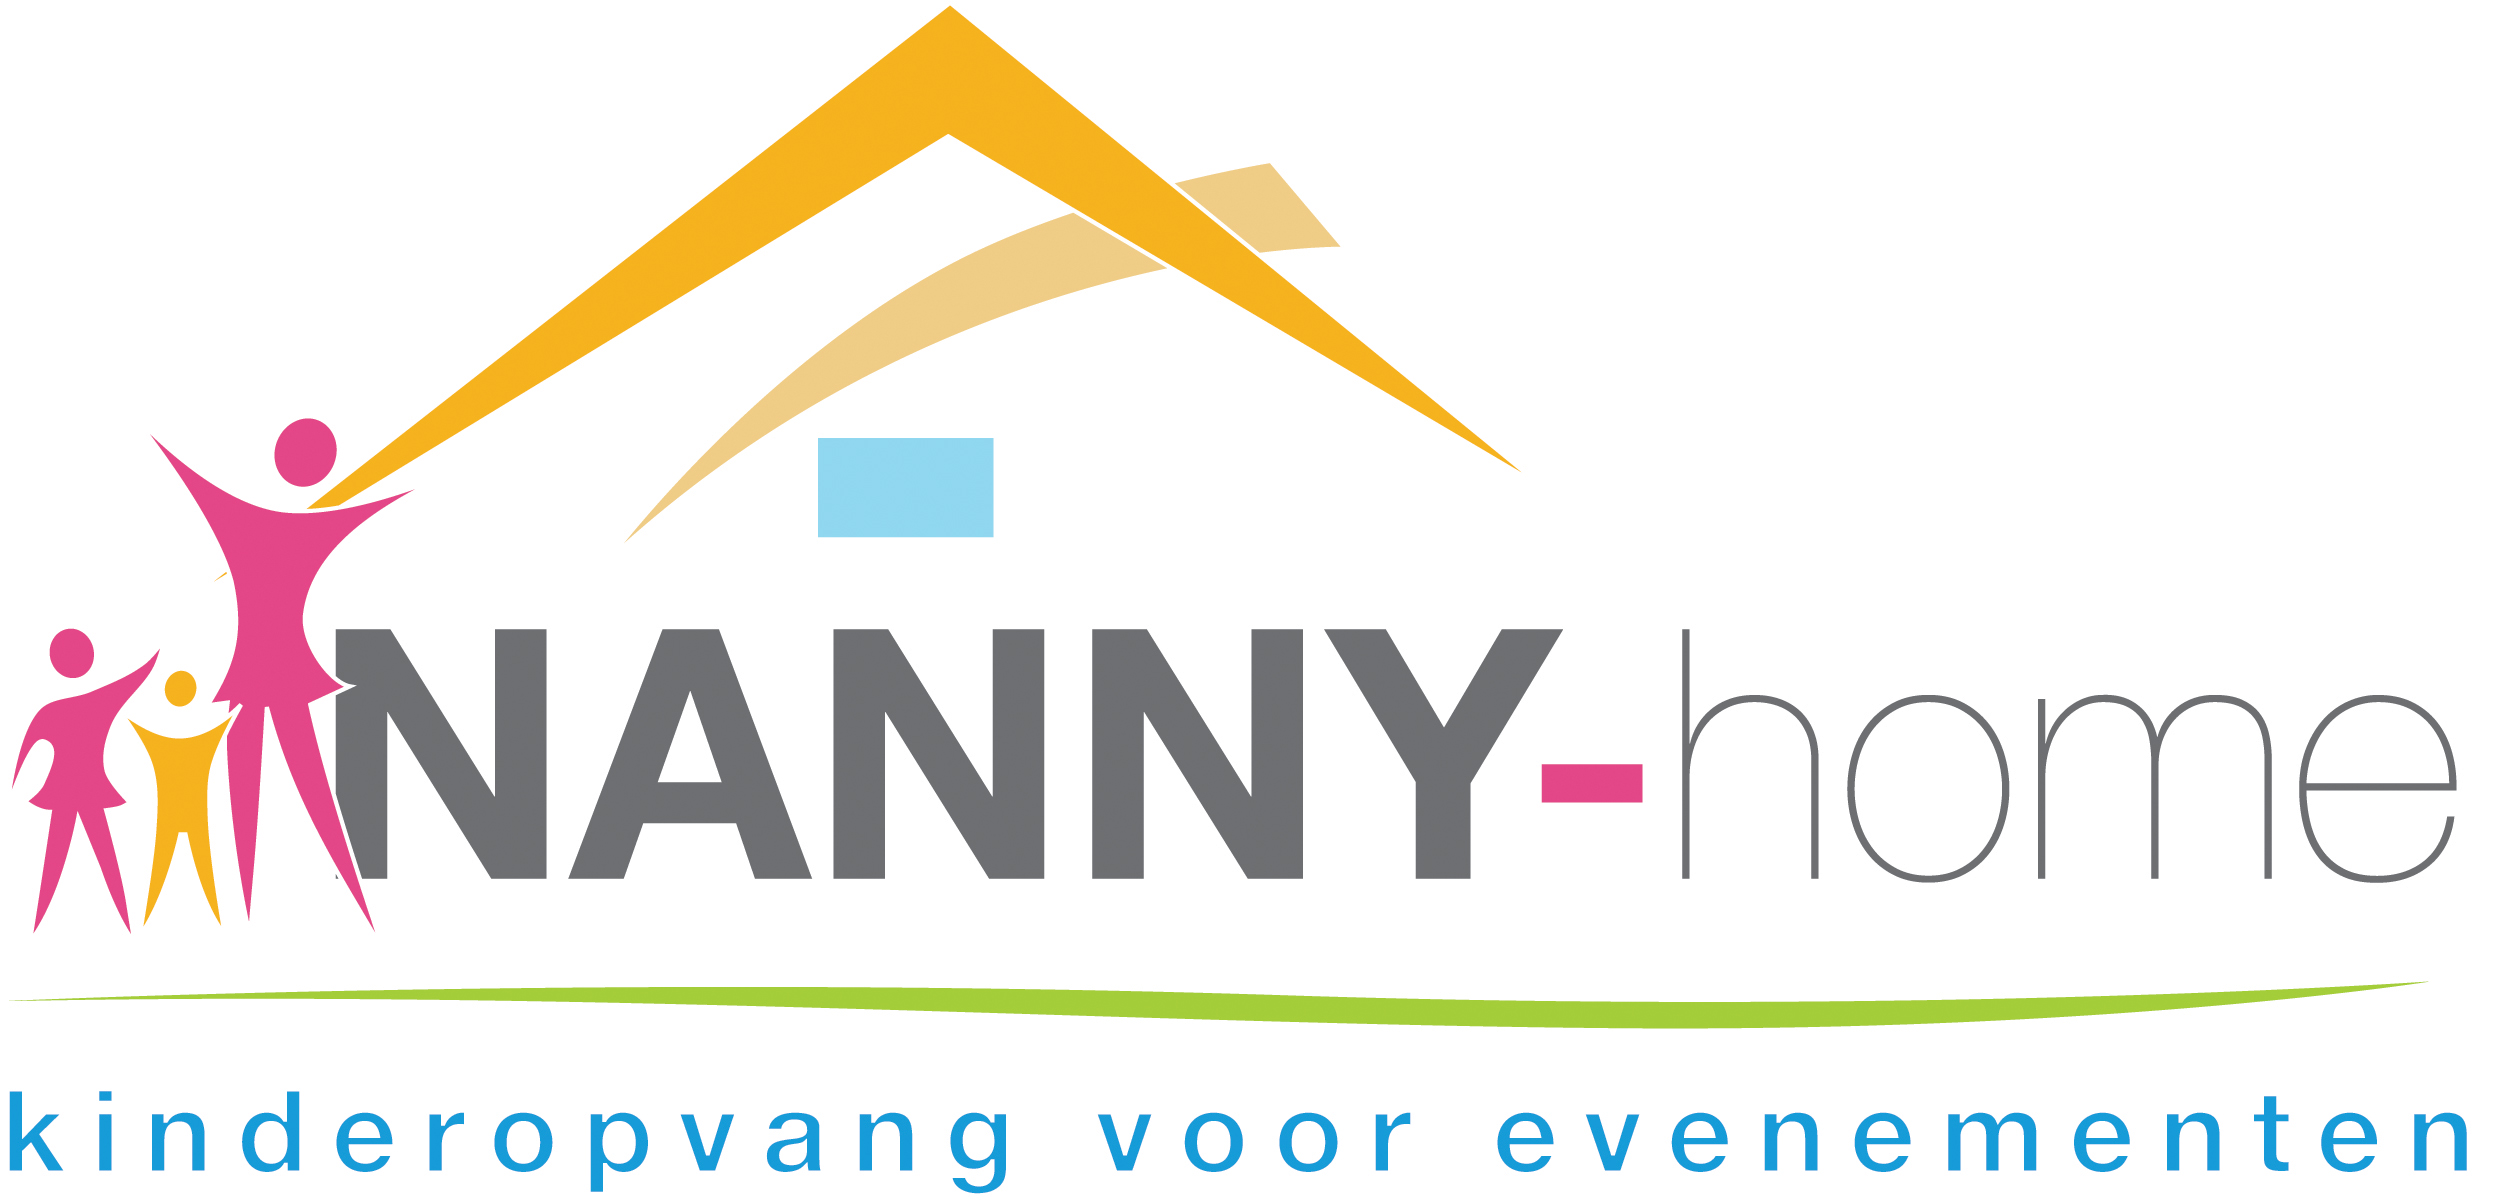 Nanny-home evenementen